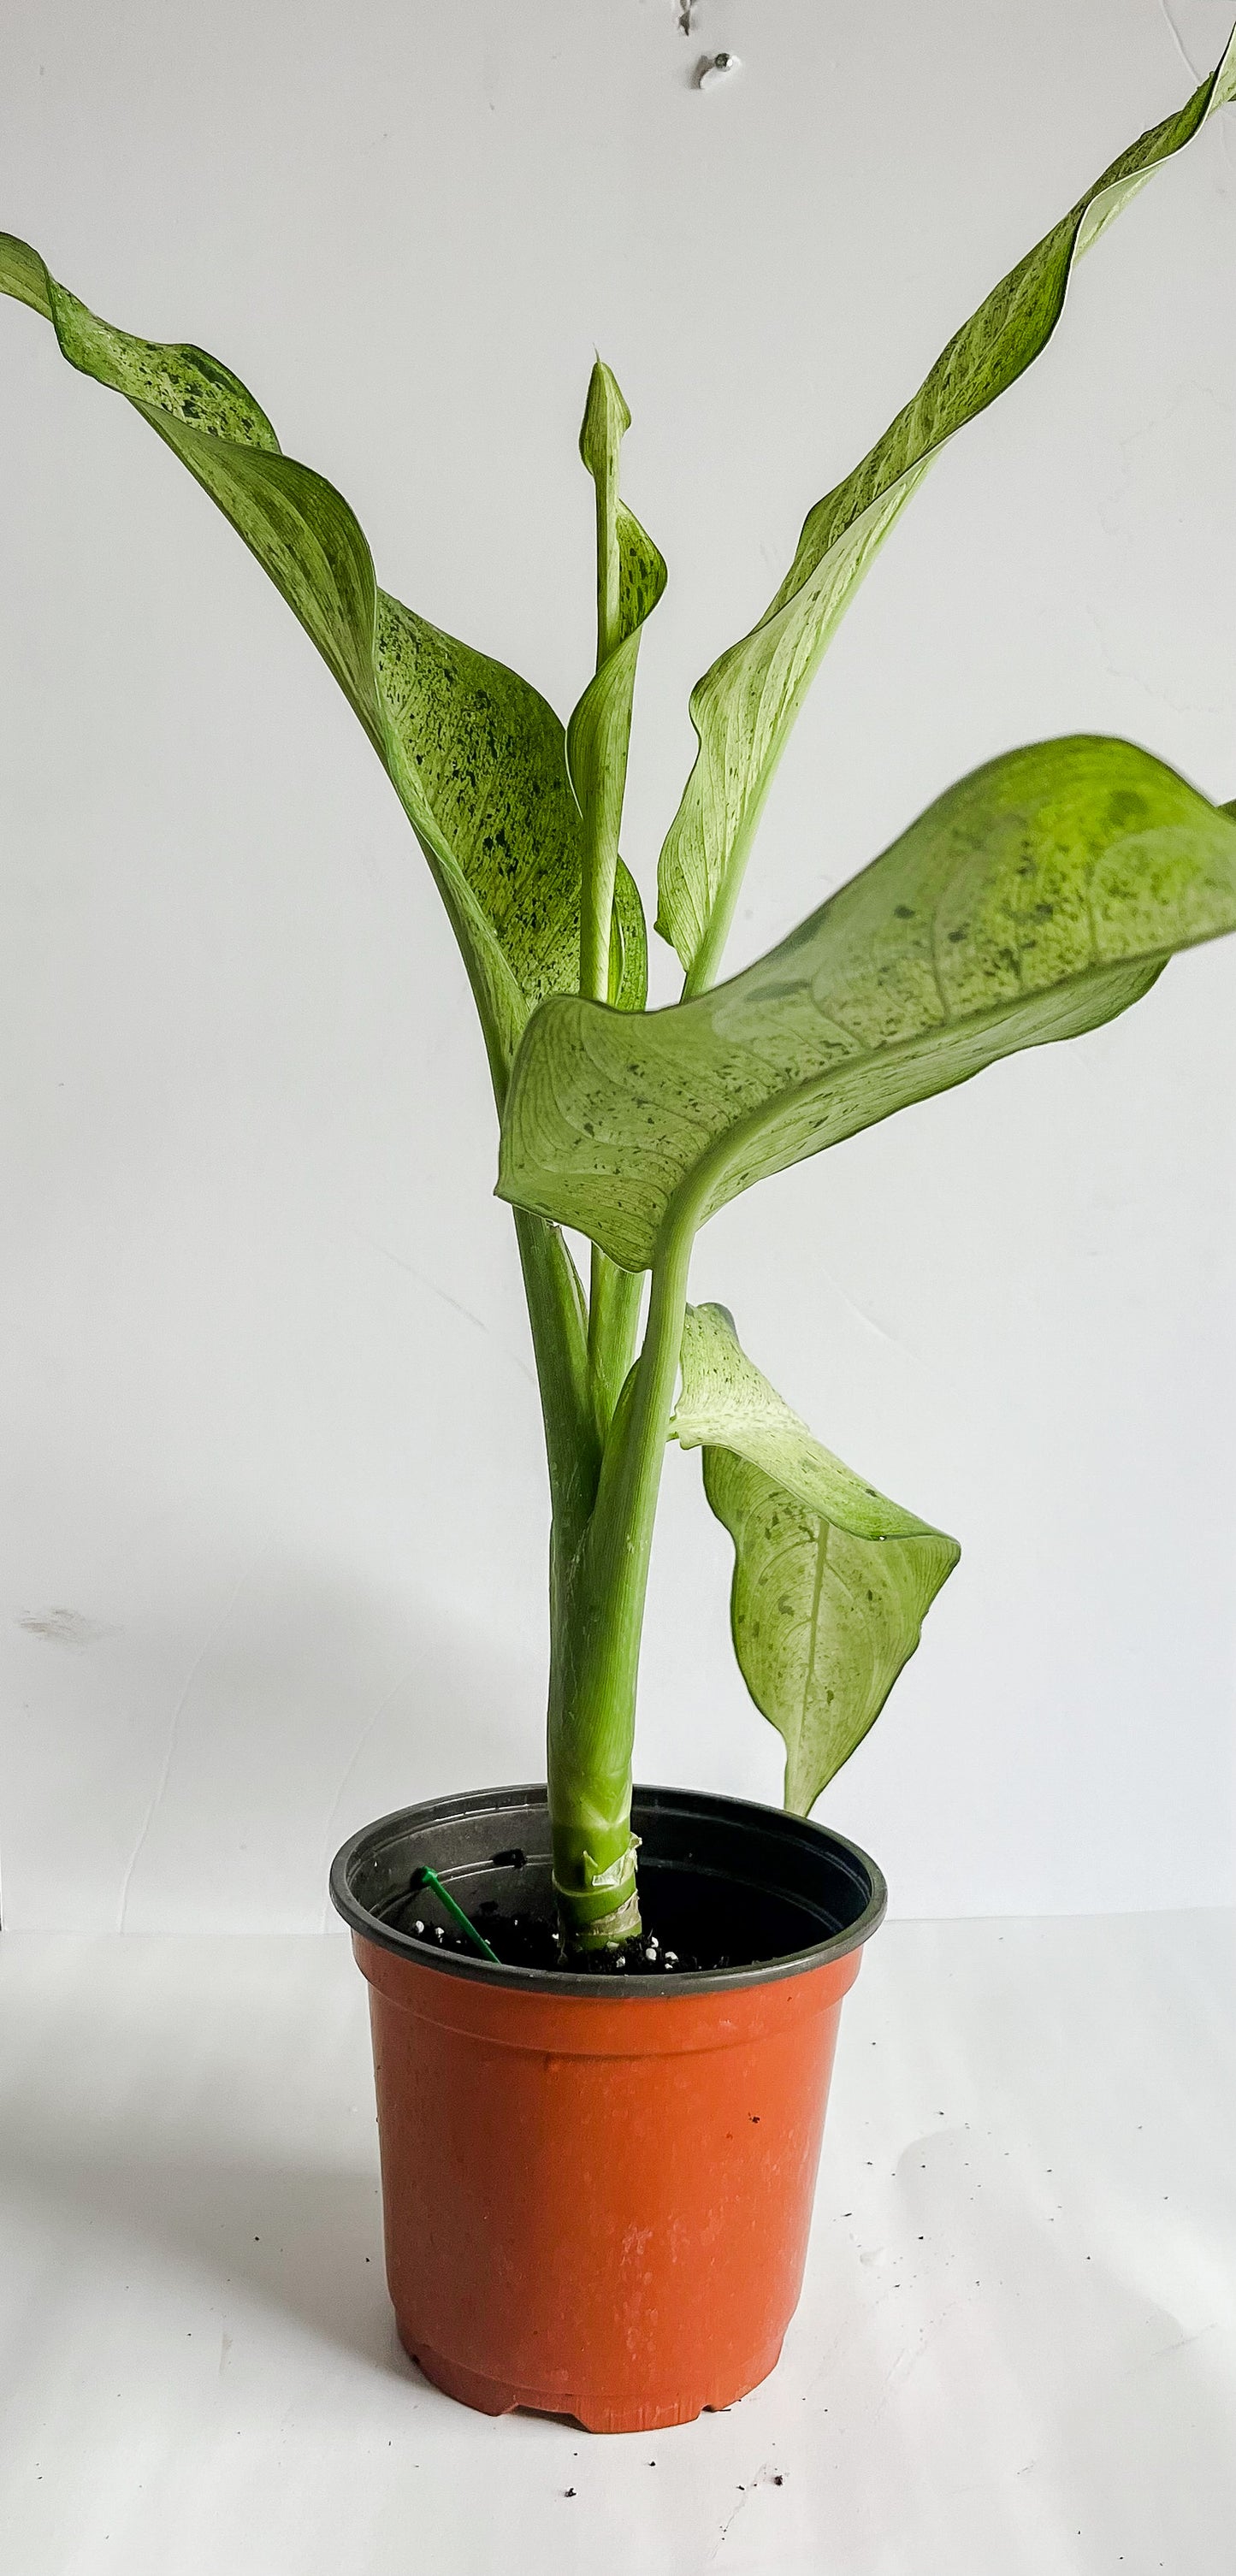 Dieffenbachia 'Camouflage' Dumb Cane- 🌱Beginner-Friendly, Low Light Tolerant - Tropical Houseplant